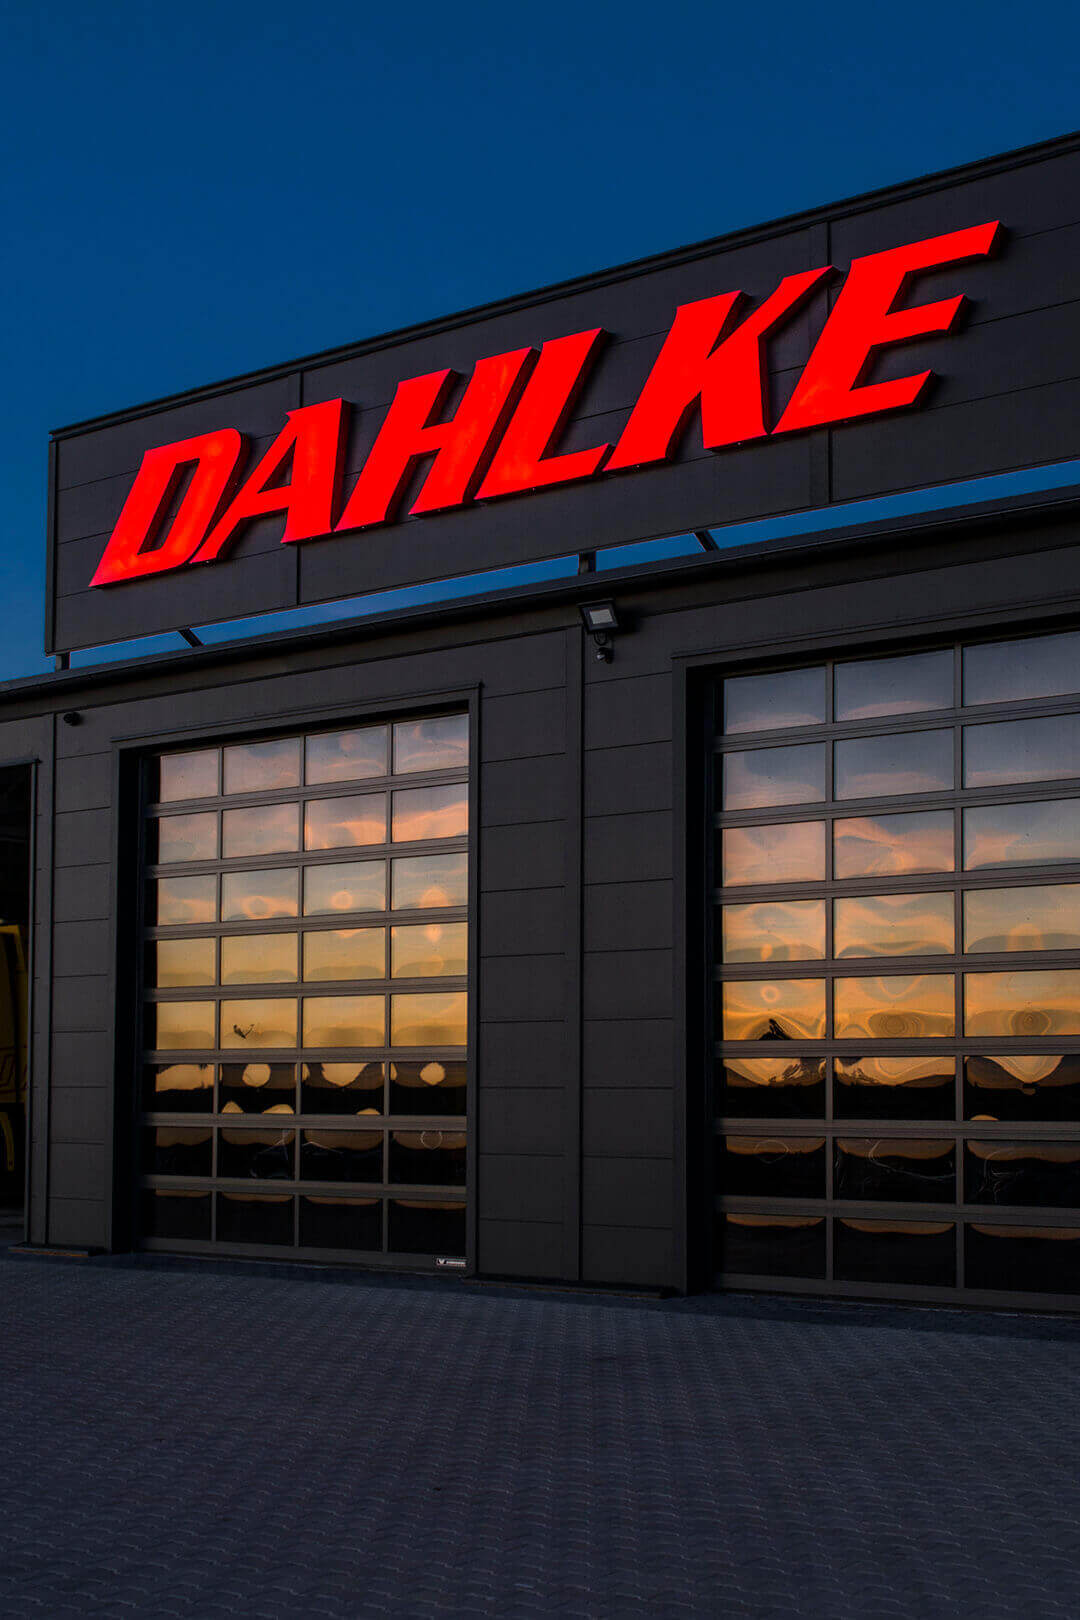 dahlke dalke roadside assistance - dahlke-marek road assistance-lipinki-noble-bypass-light-letters-on-the-building-red-inscription-over-the-entrance-large-letters-on-the-wall-on-outside-letters-over-the-gate-entrance-yellow- backlit